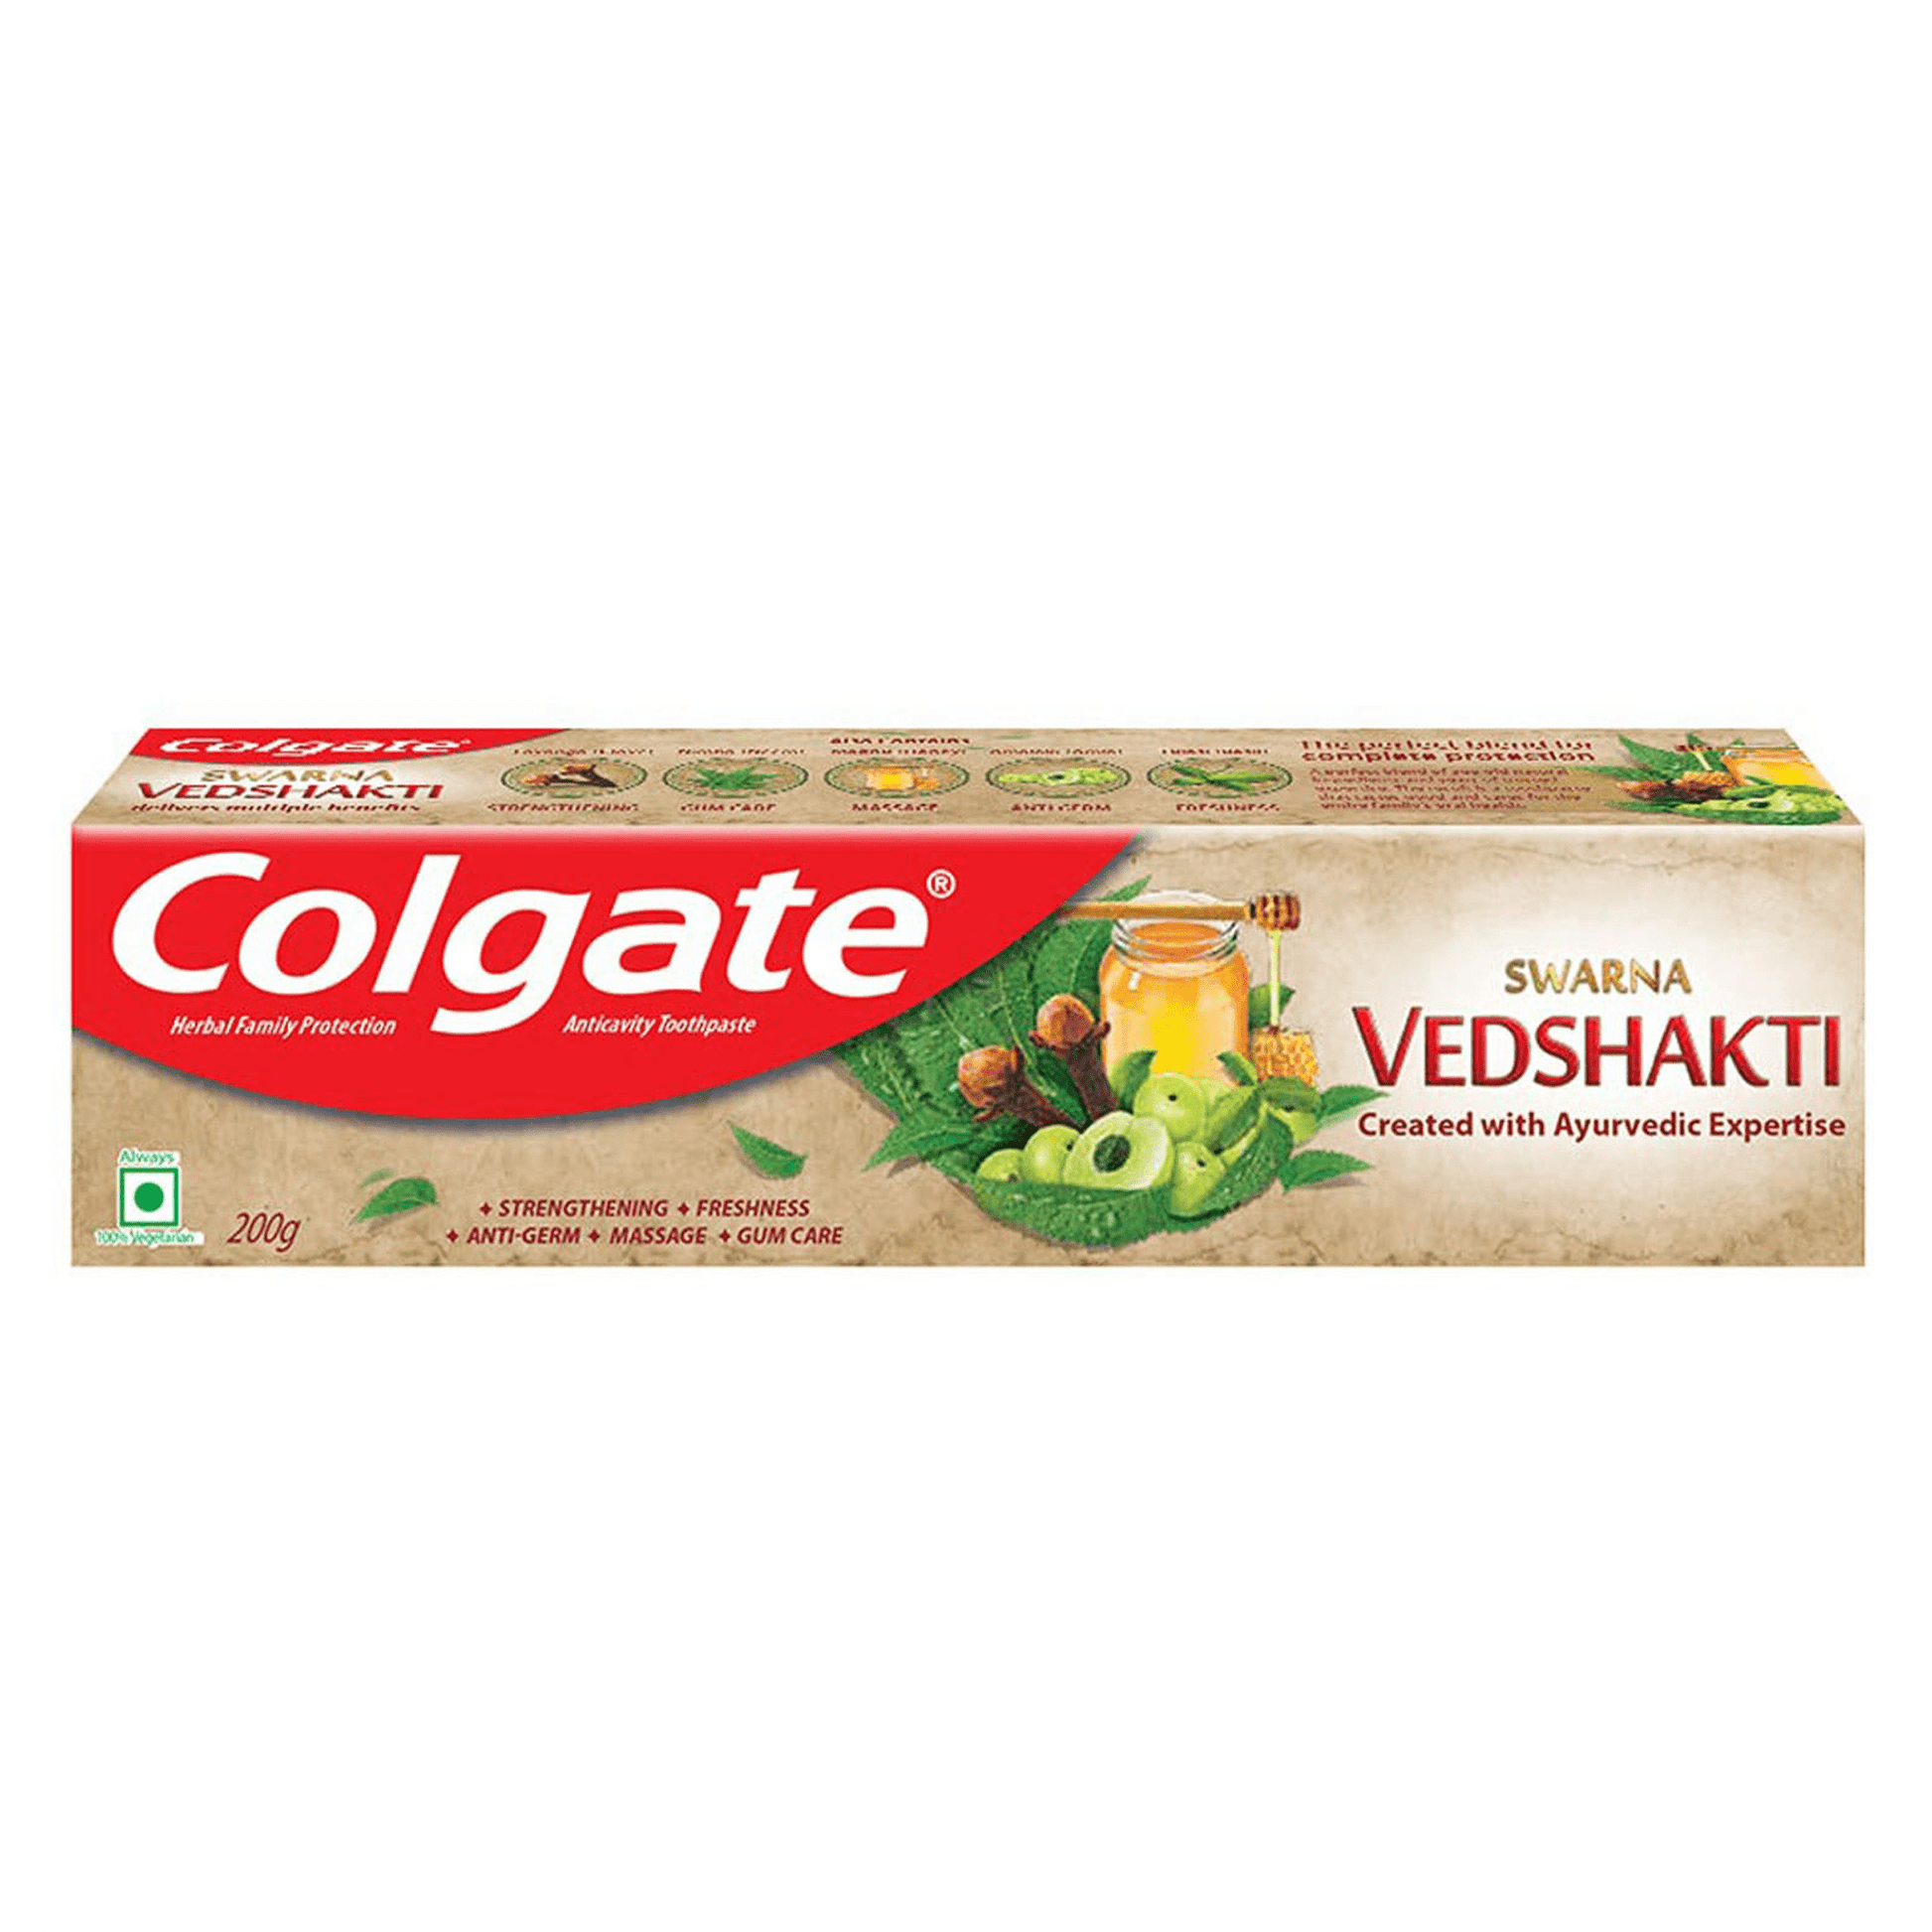 Colgate Swarna Vedshakti Tooth Paste.